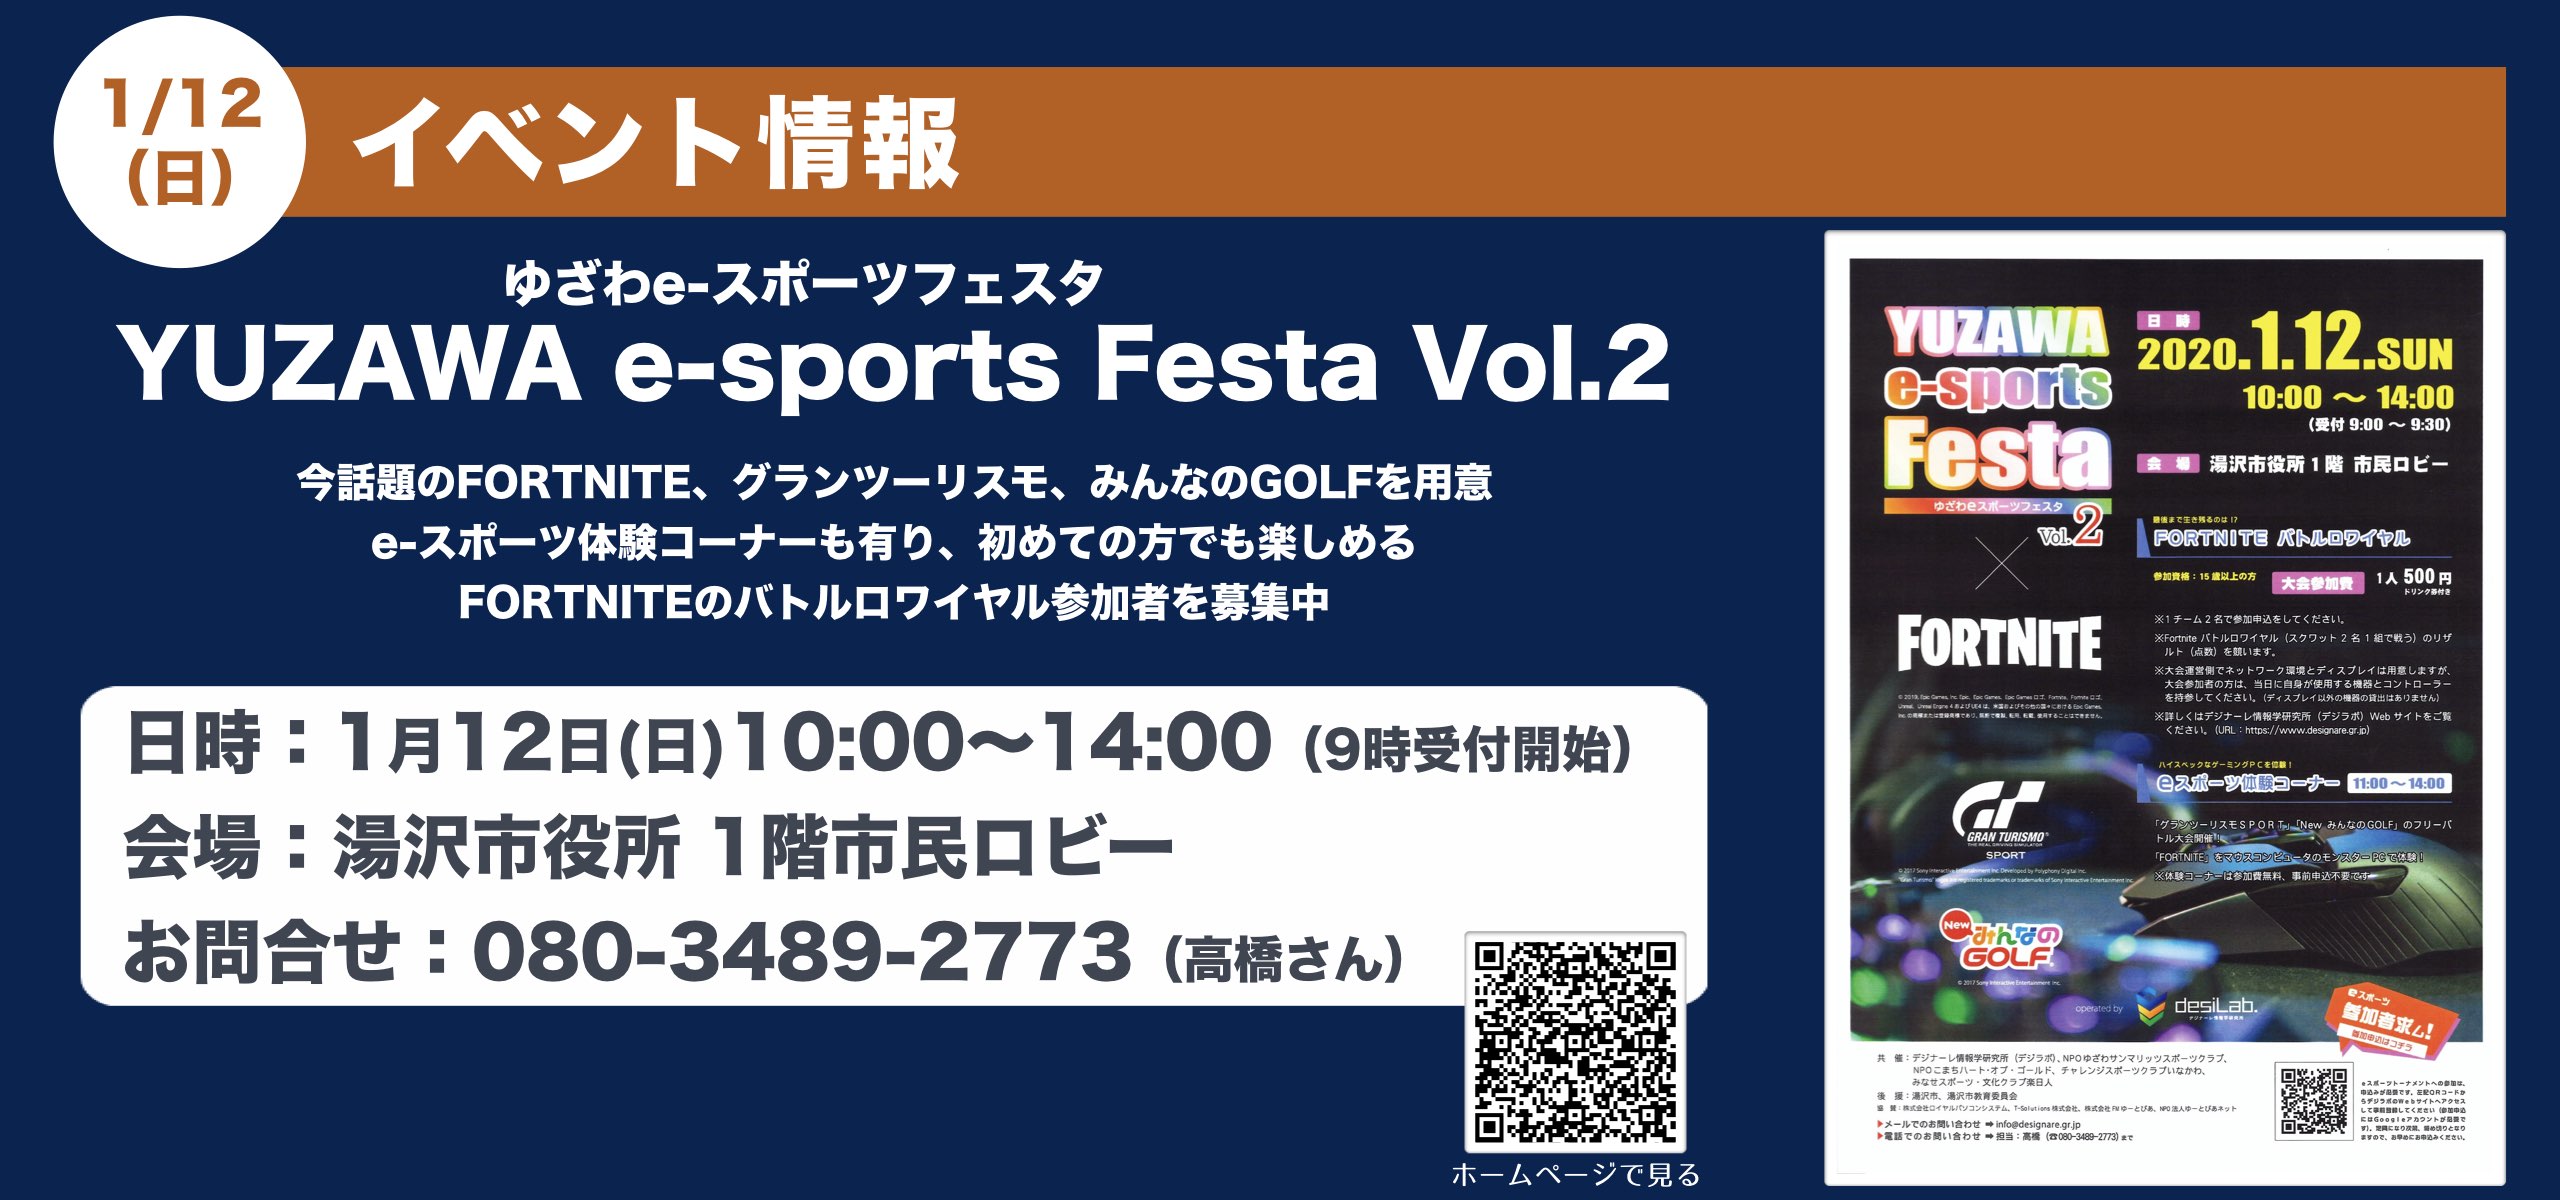 YUZAWA e-sports Festa Vol.2